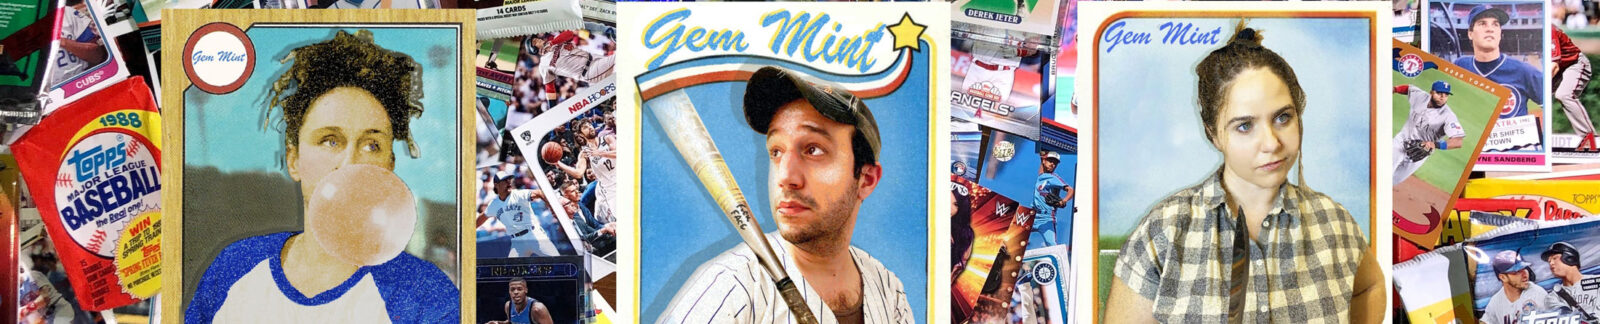 Gem Mint baseball movie header